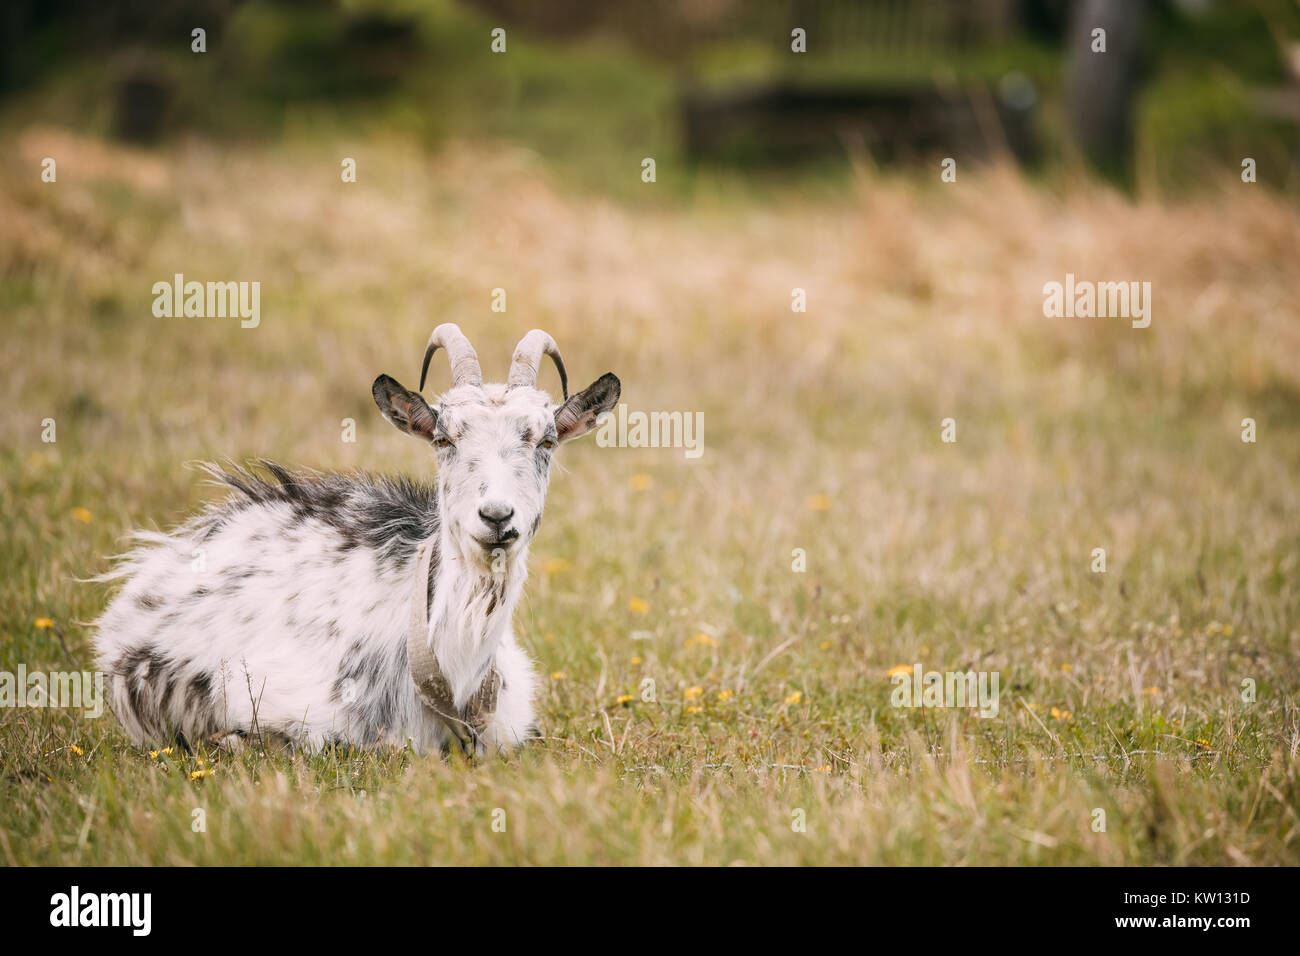 Goat Sitting In Spring Grass In Village. Farm Animal. Stock Photo